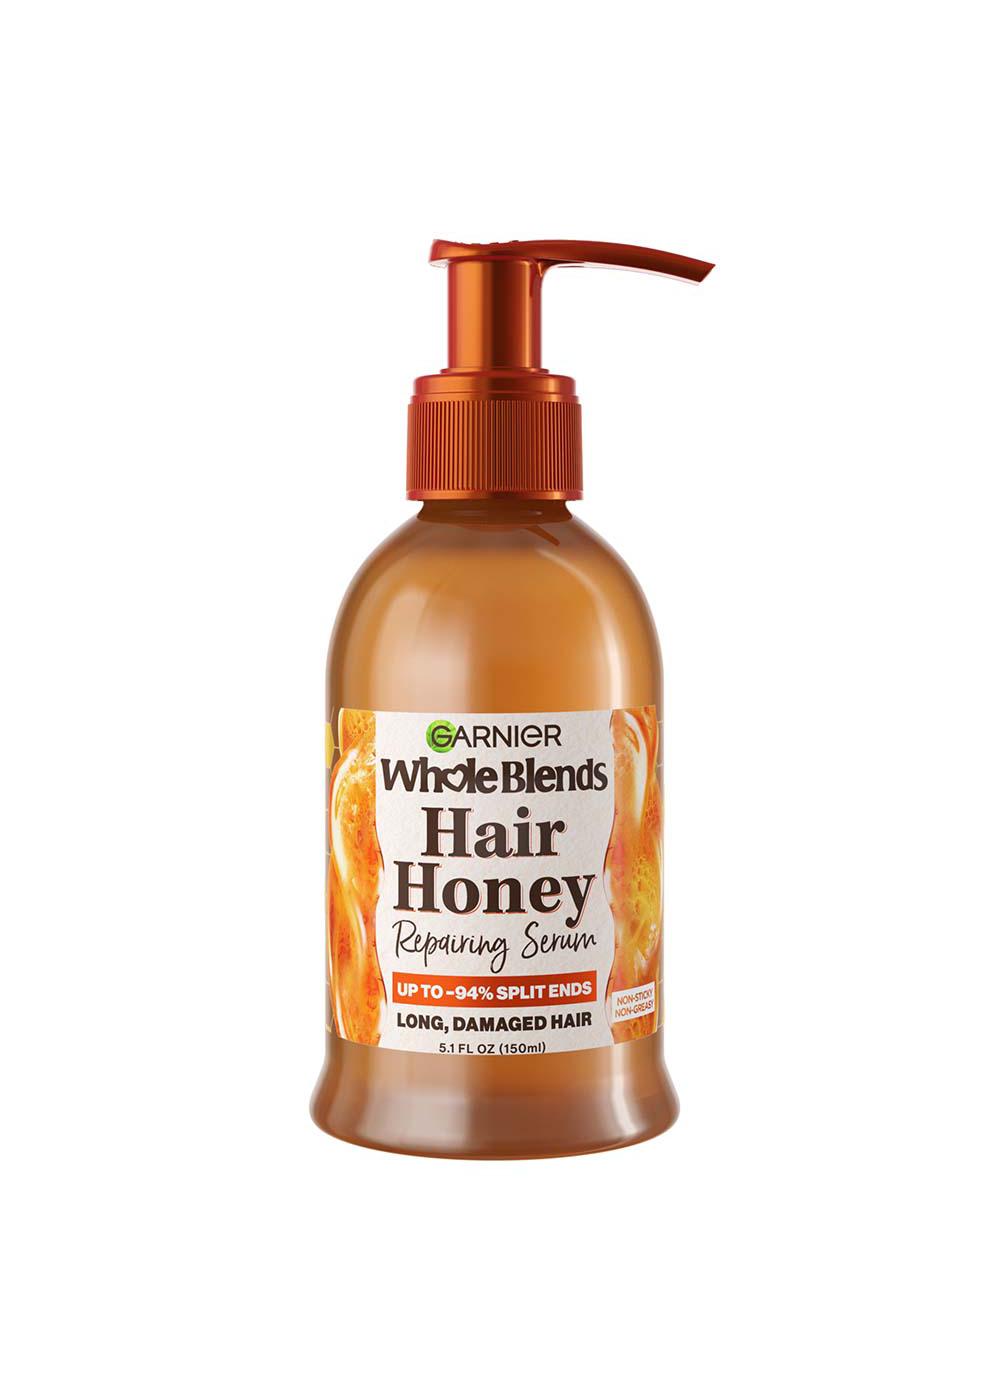 Garnier Whole Blends Hair Honey Repairing Serum; image 1 of 10